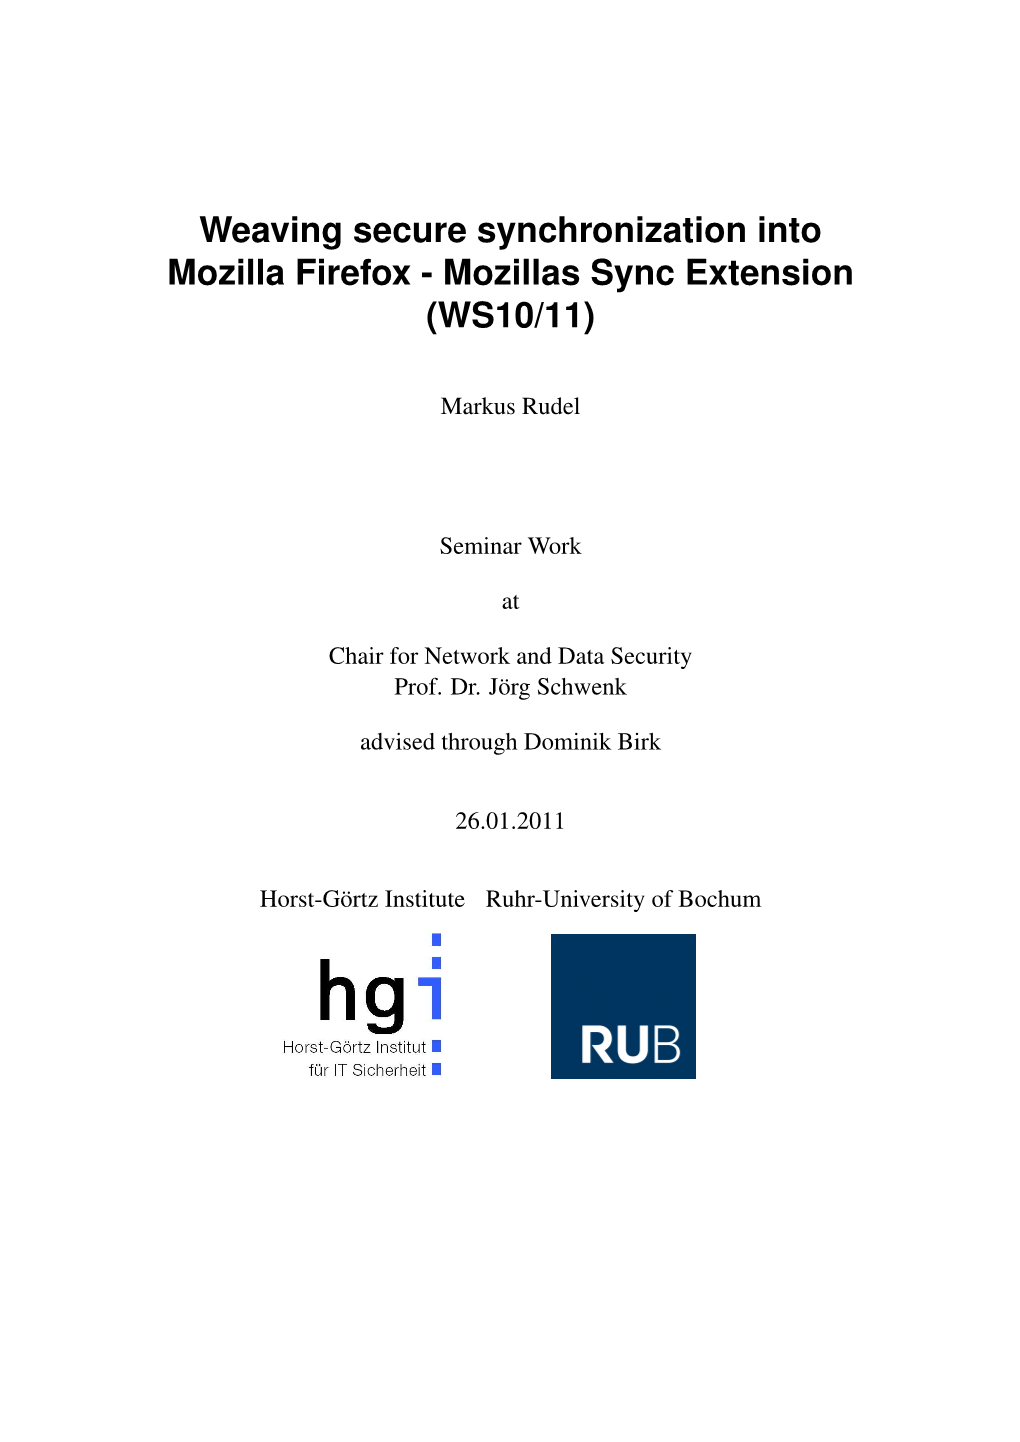 Mozillas Sync Extension (WS10/11)